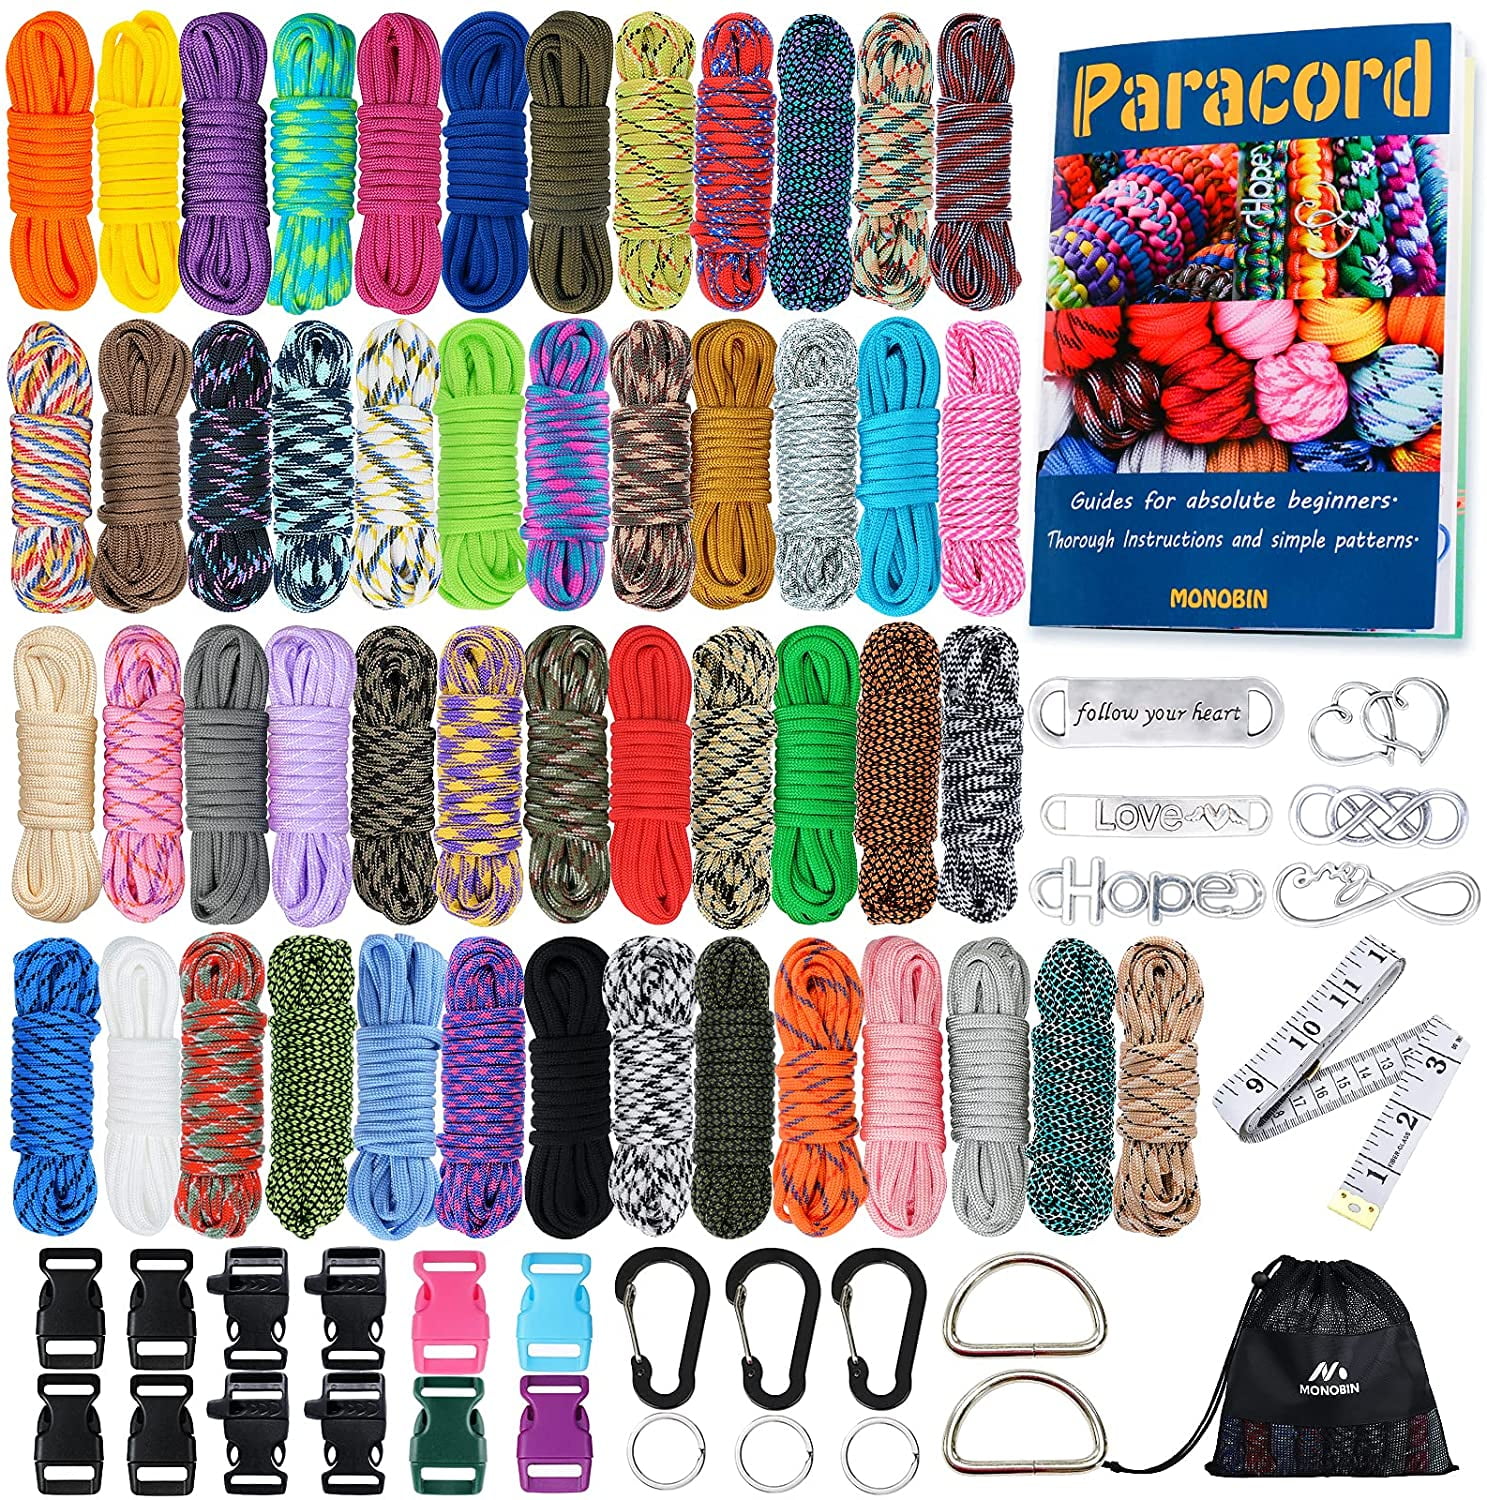 MONOBIN Paracord, 50 Colors Paracord Combo Kit - Multifunction